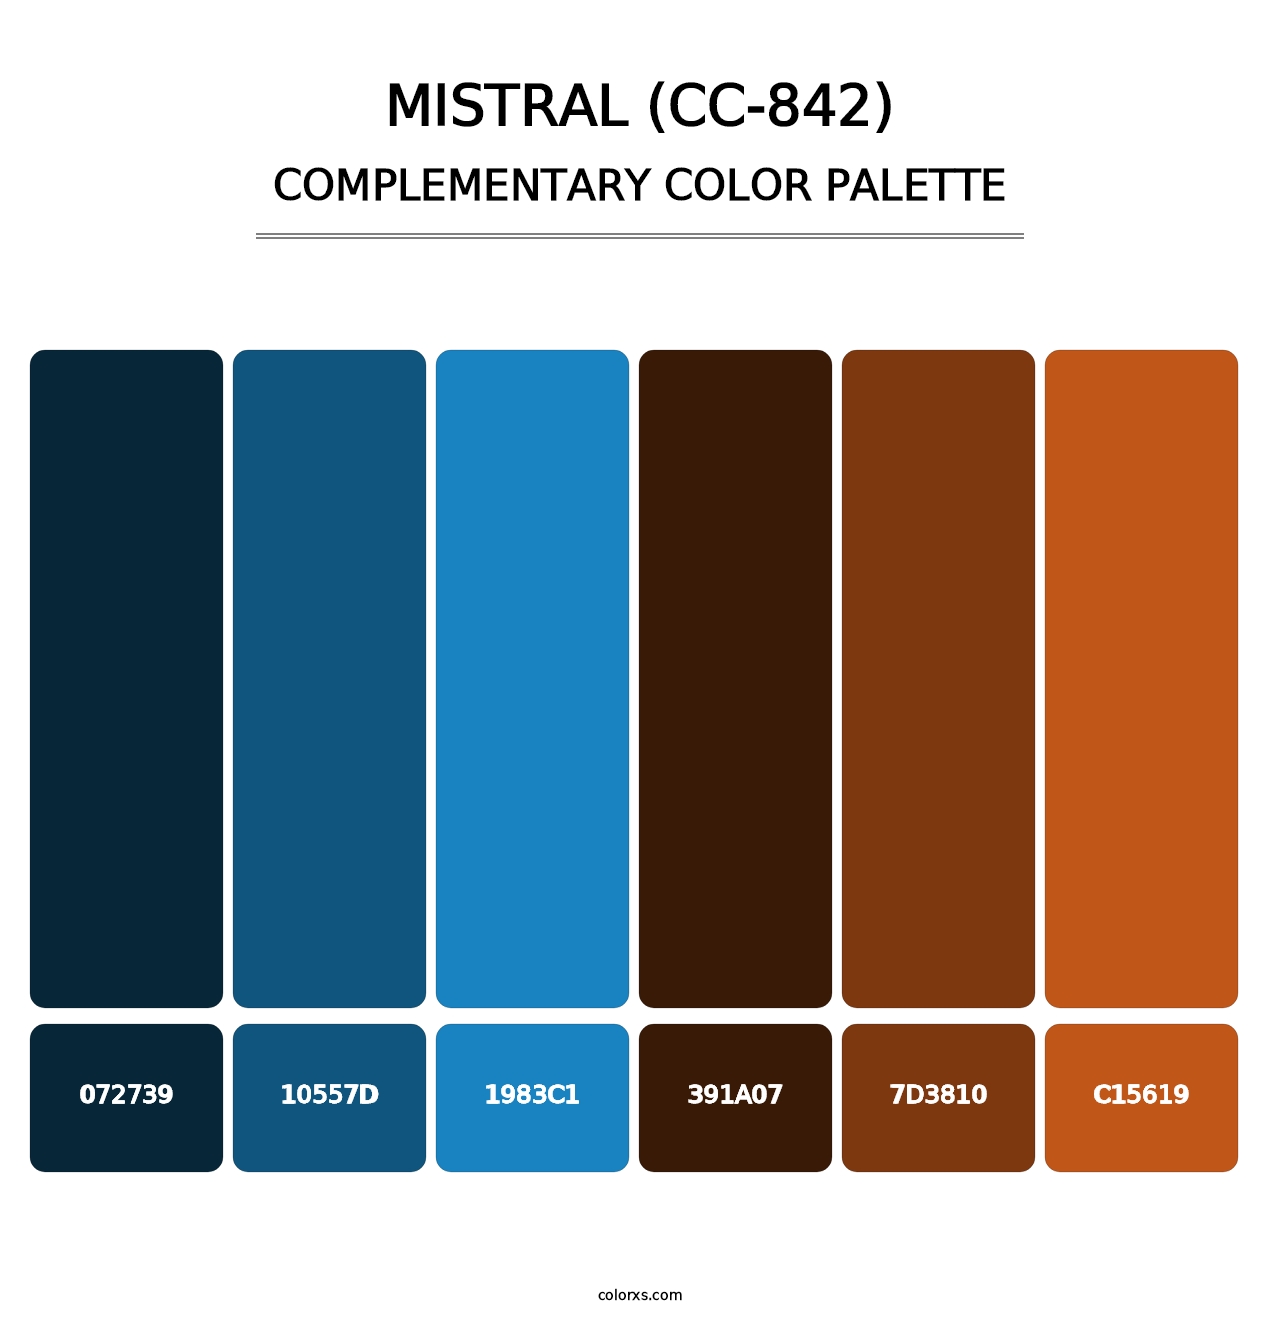 Mistral (CC-842) - Complementary Color Palette